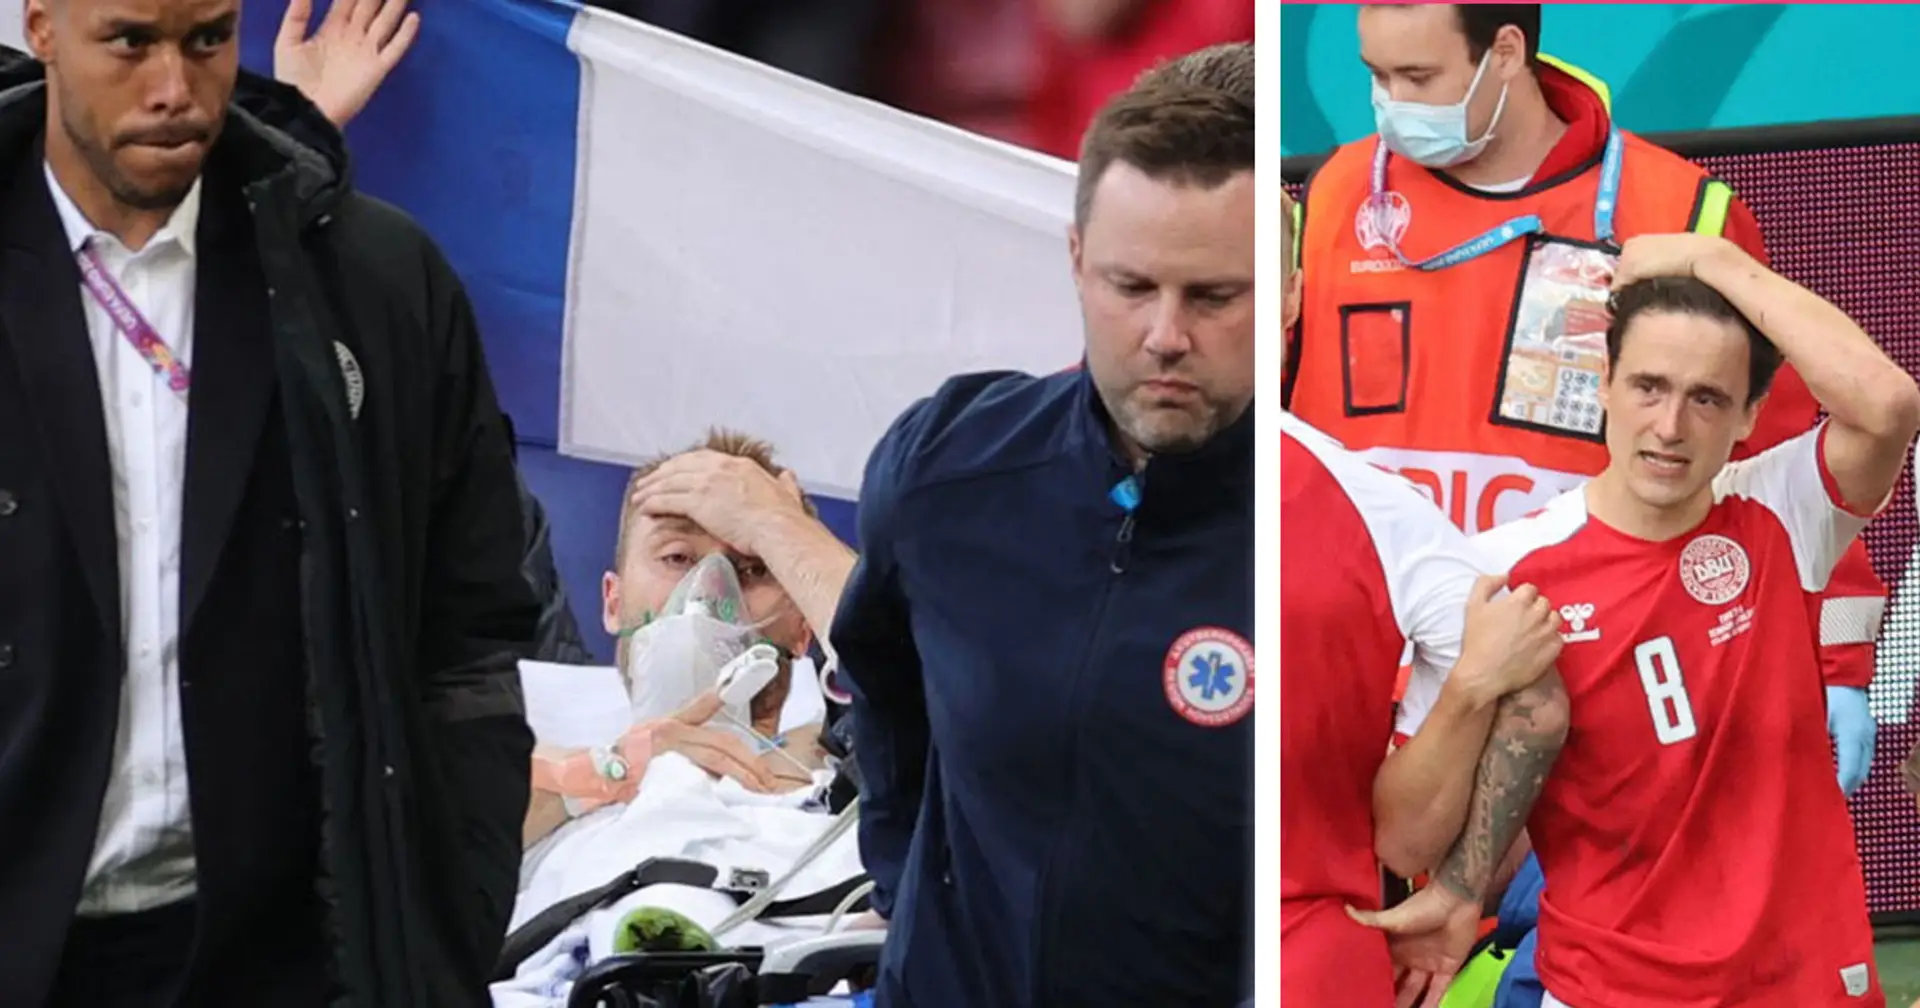 Man United, Rashford & more: Football world reacts as Christian Eriksen collapses in Euro 2020 game